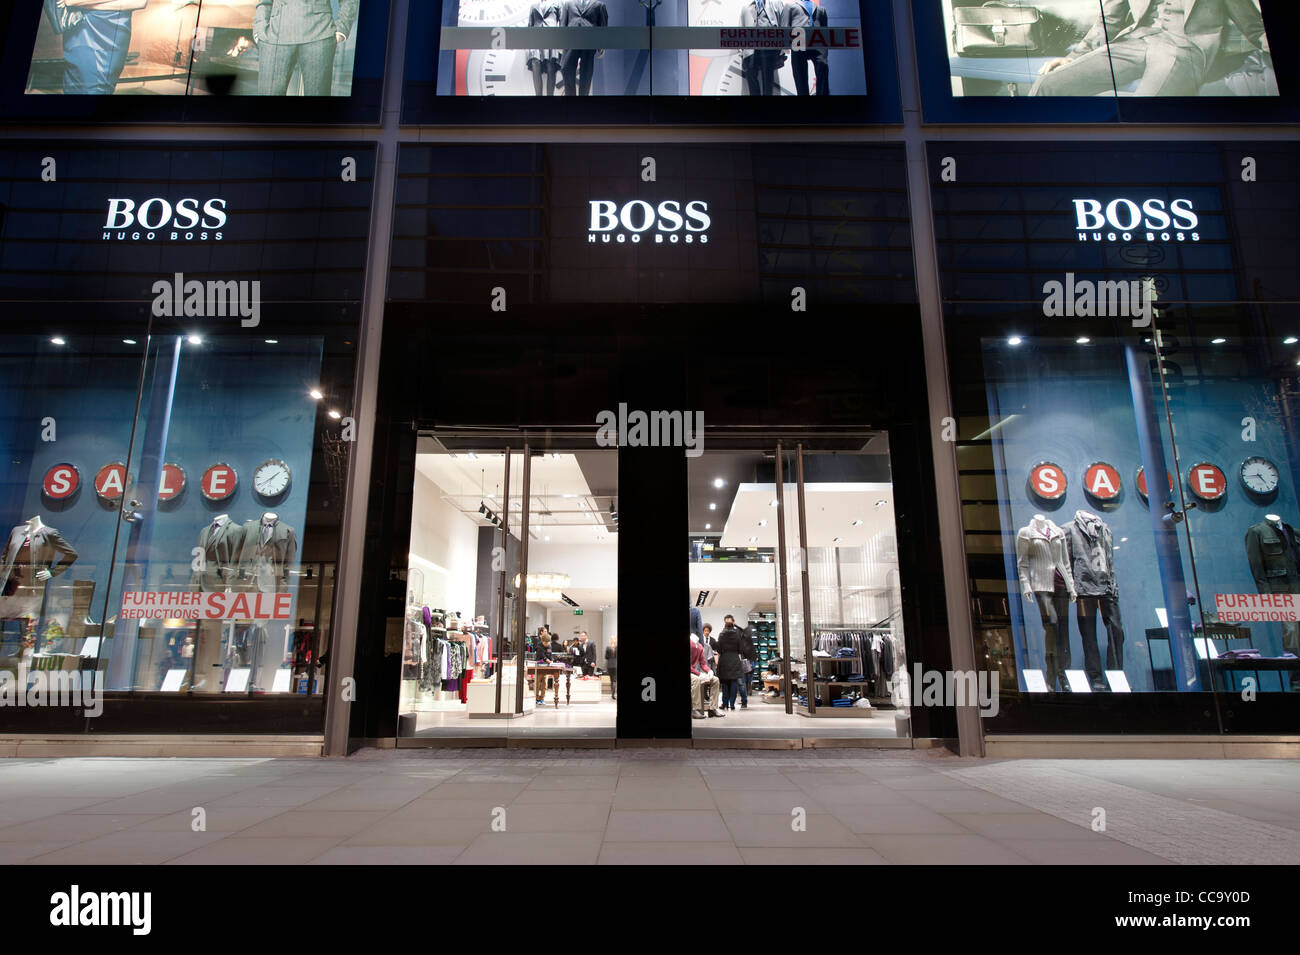 hugo boss shop london